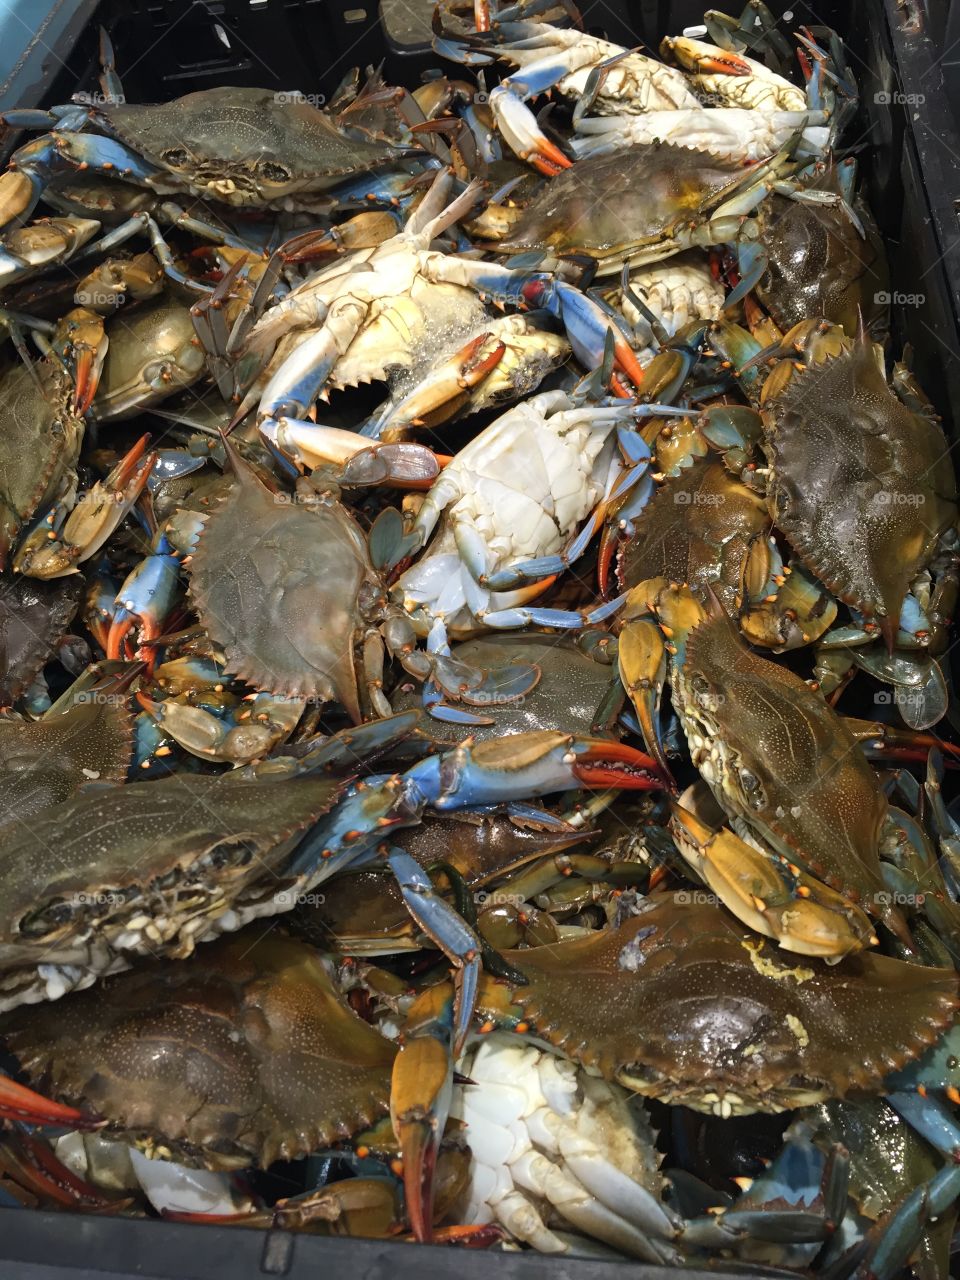 Blue crab for dinner!. Blue crab